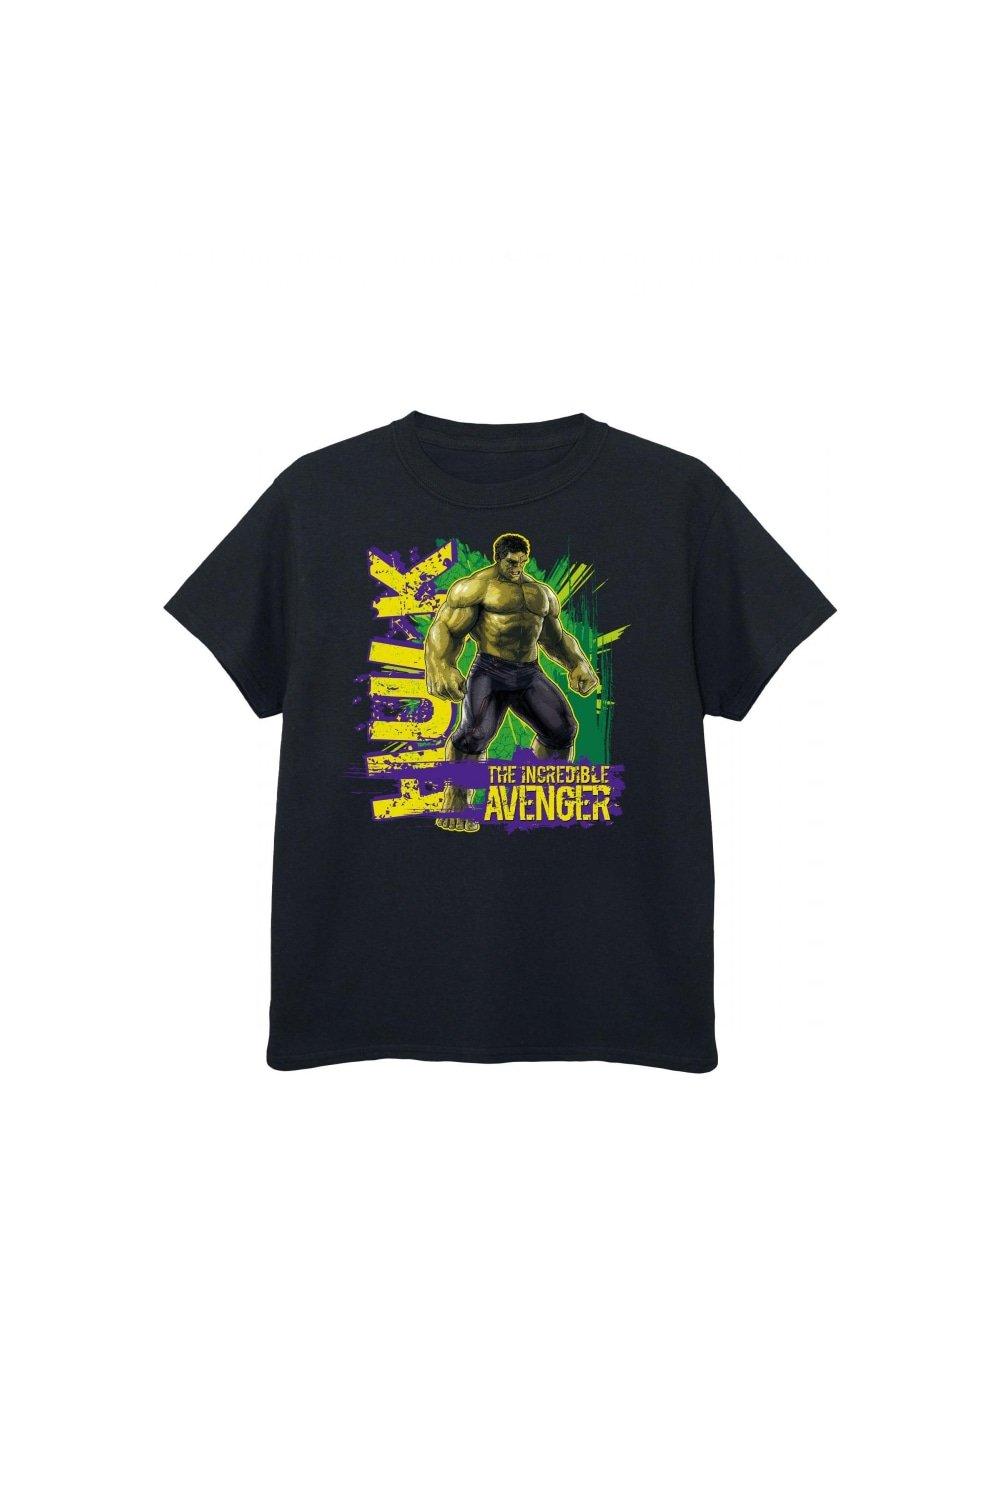 Incredible Avenger T-Shirt